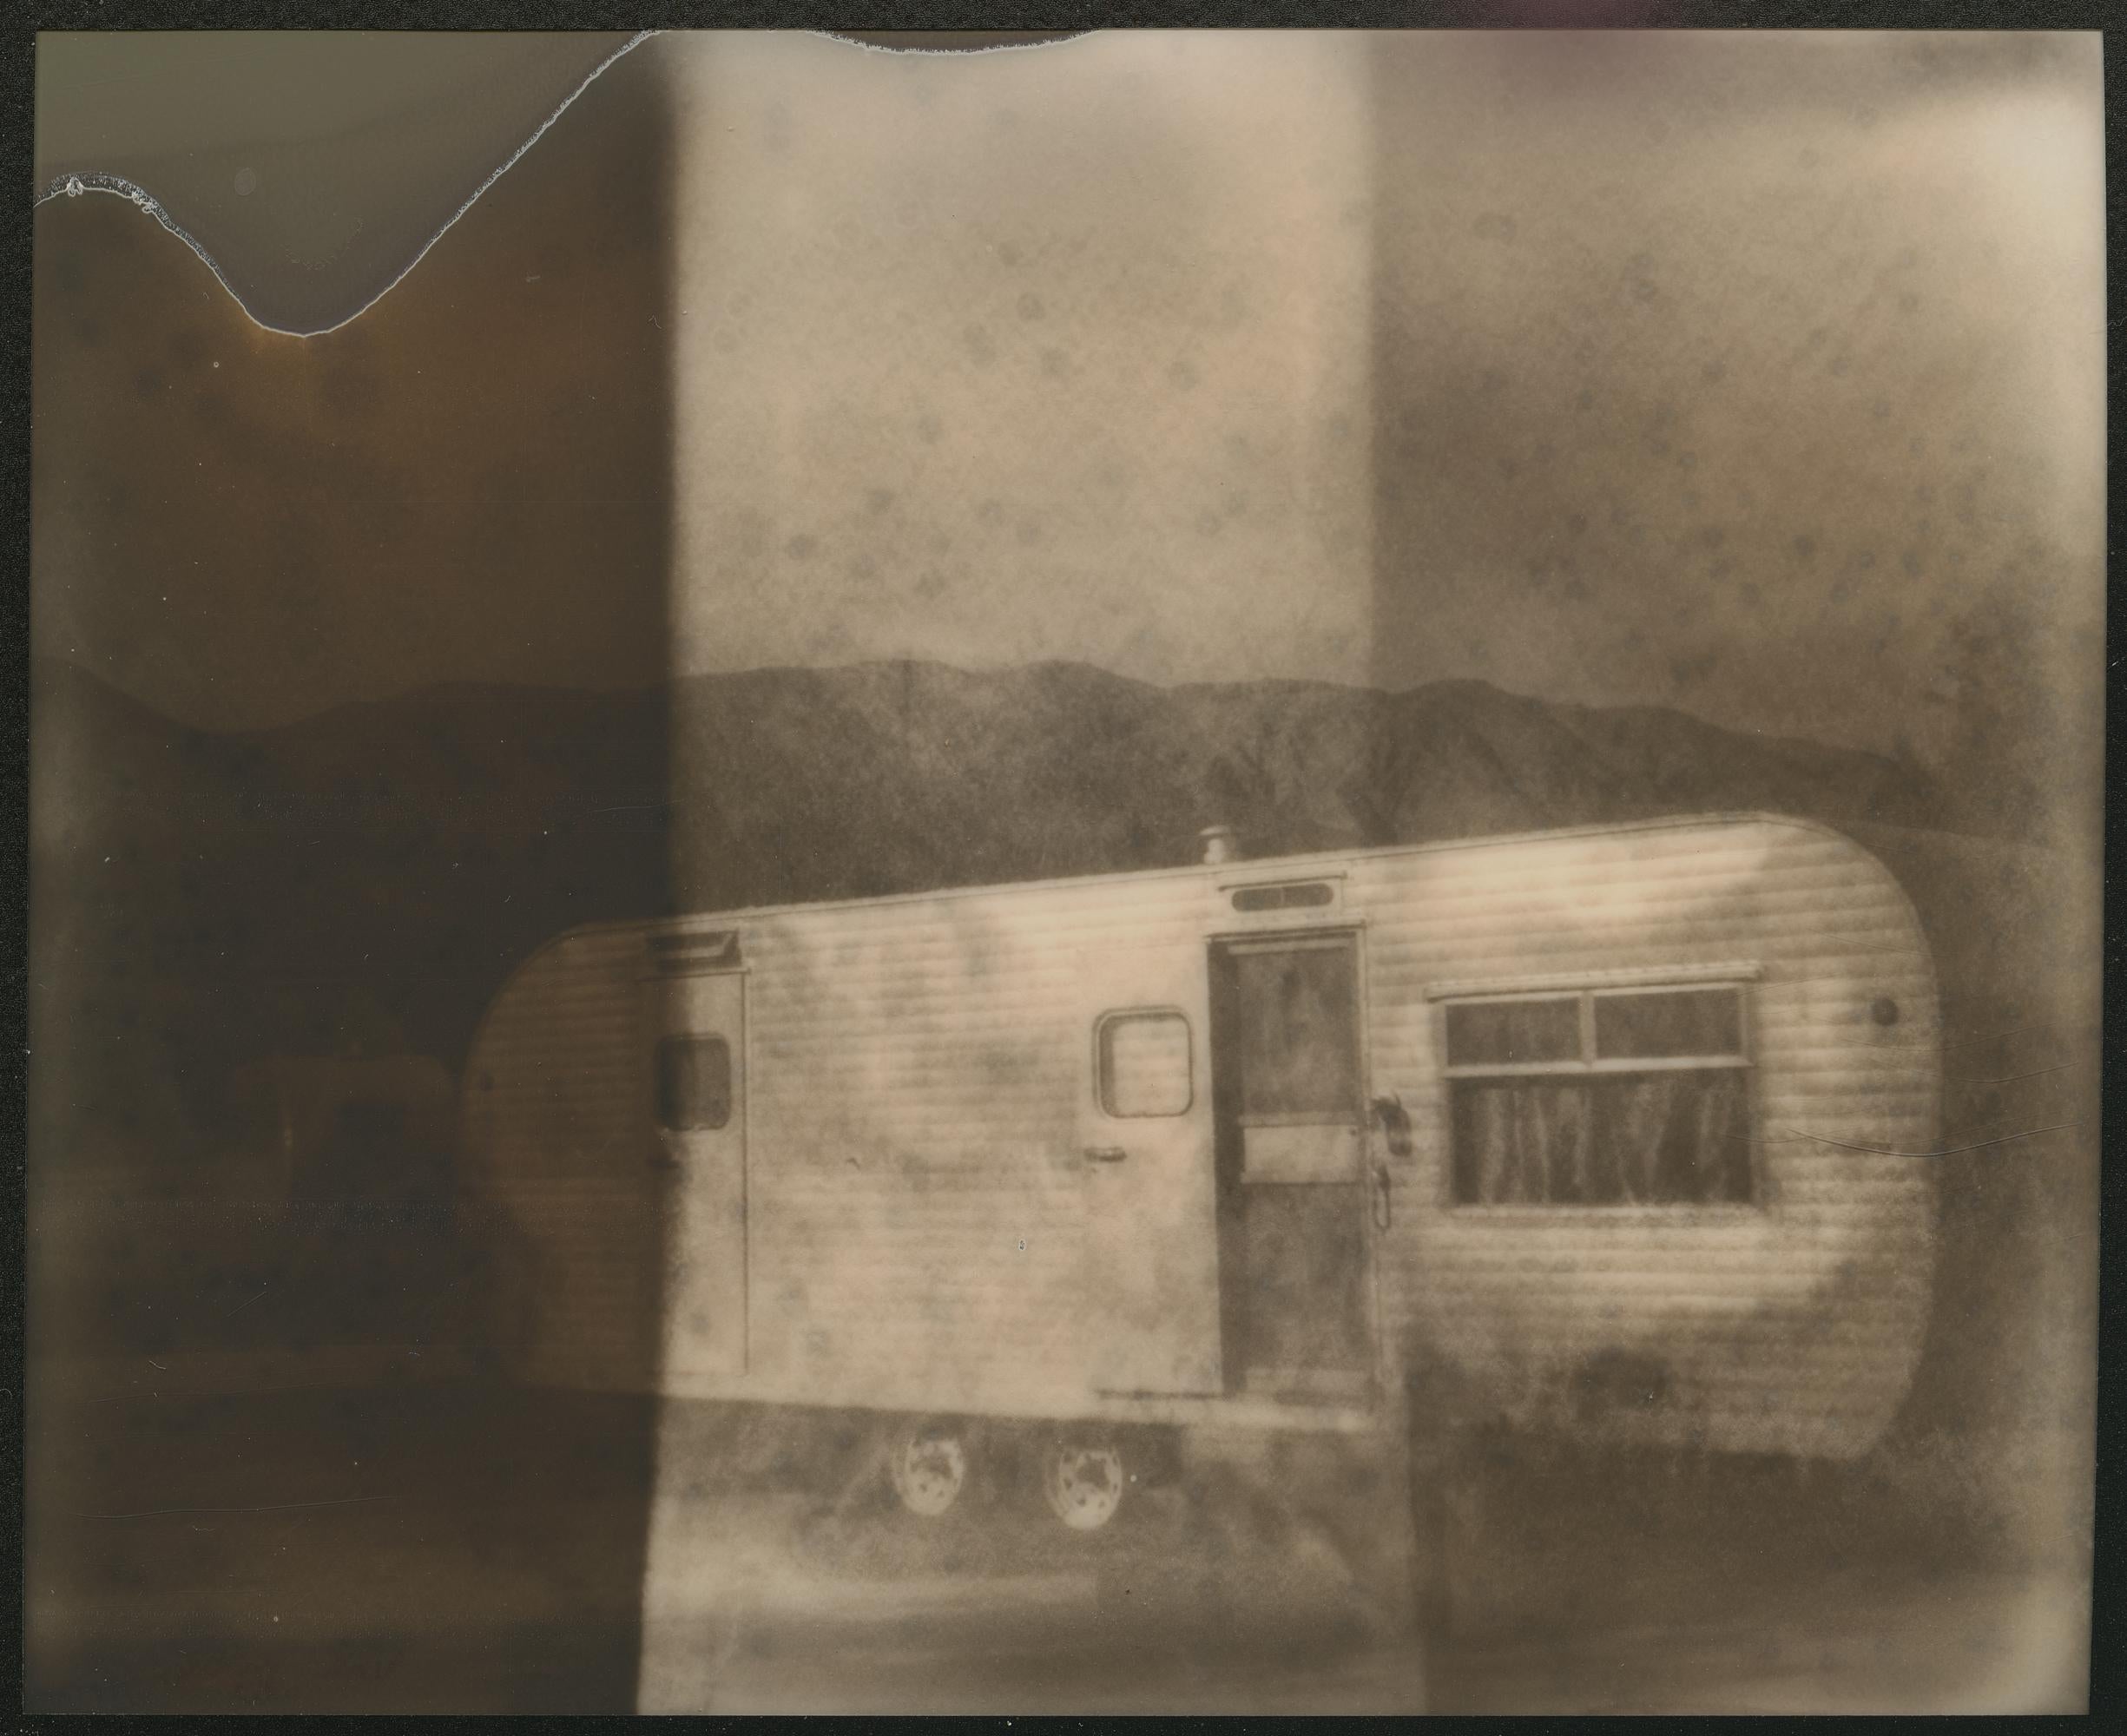 Desert Living (California Dreaming) - Contemporary, 21st Century, Polaroid